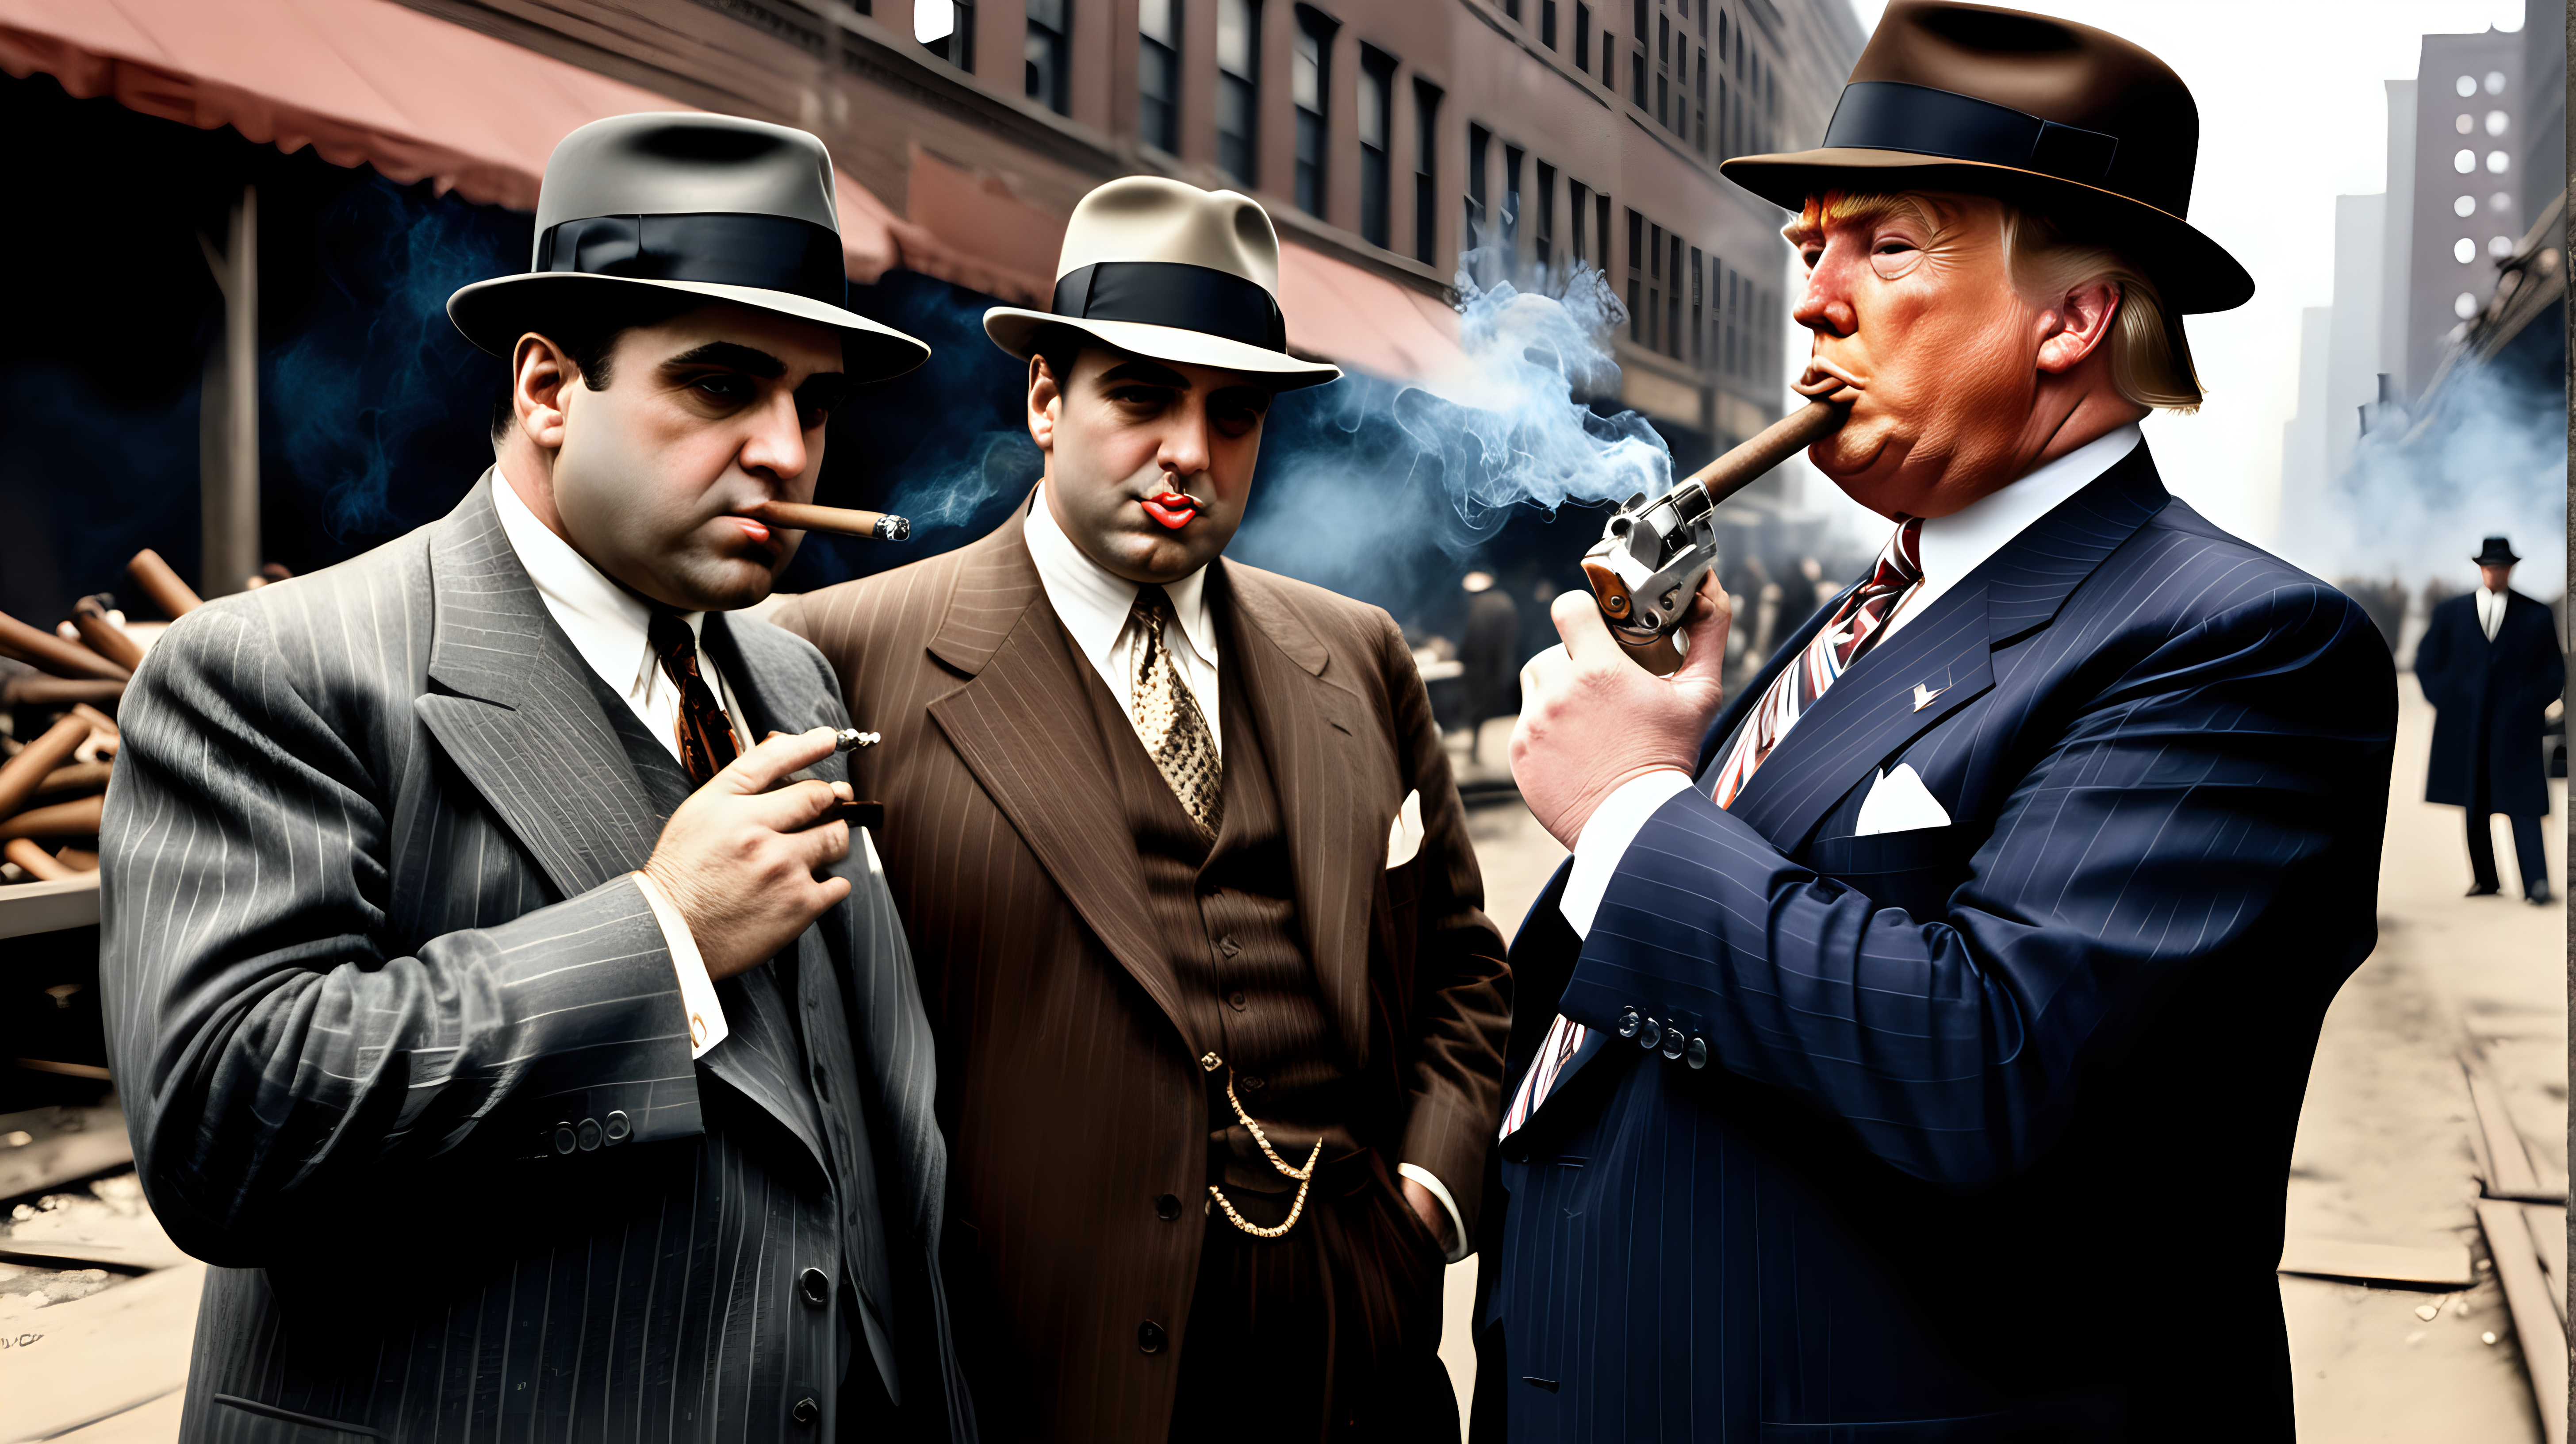 Al Capone Donald Trump smoking a cigar and